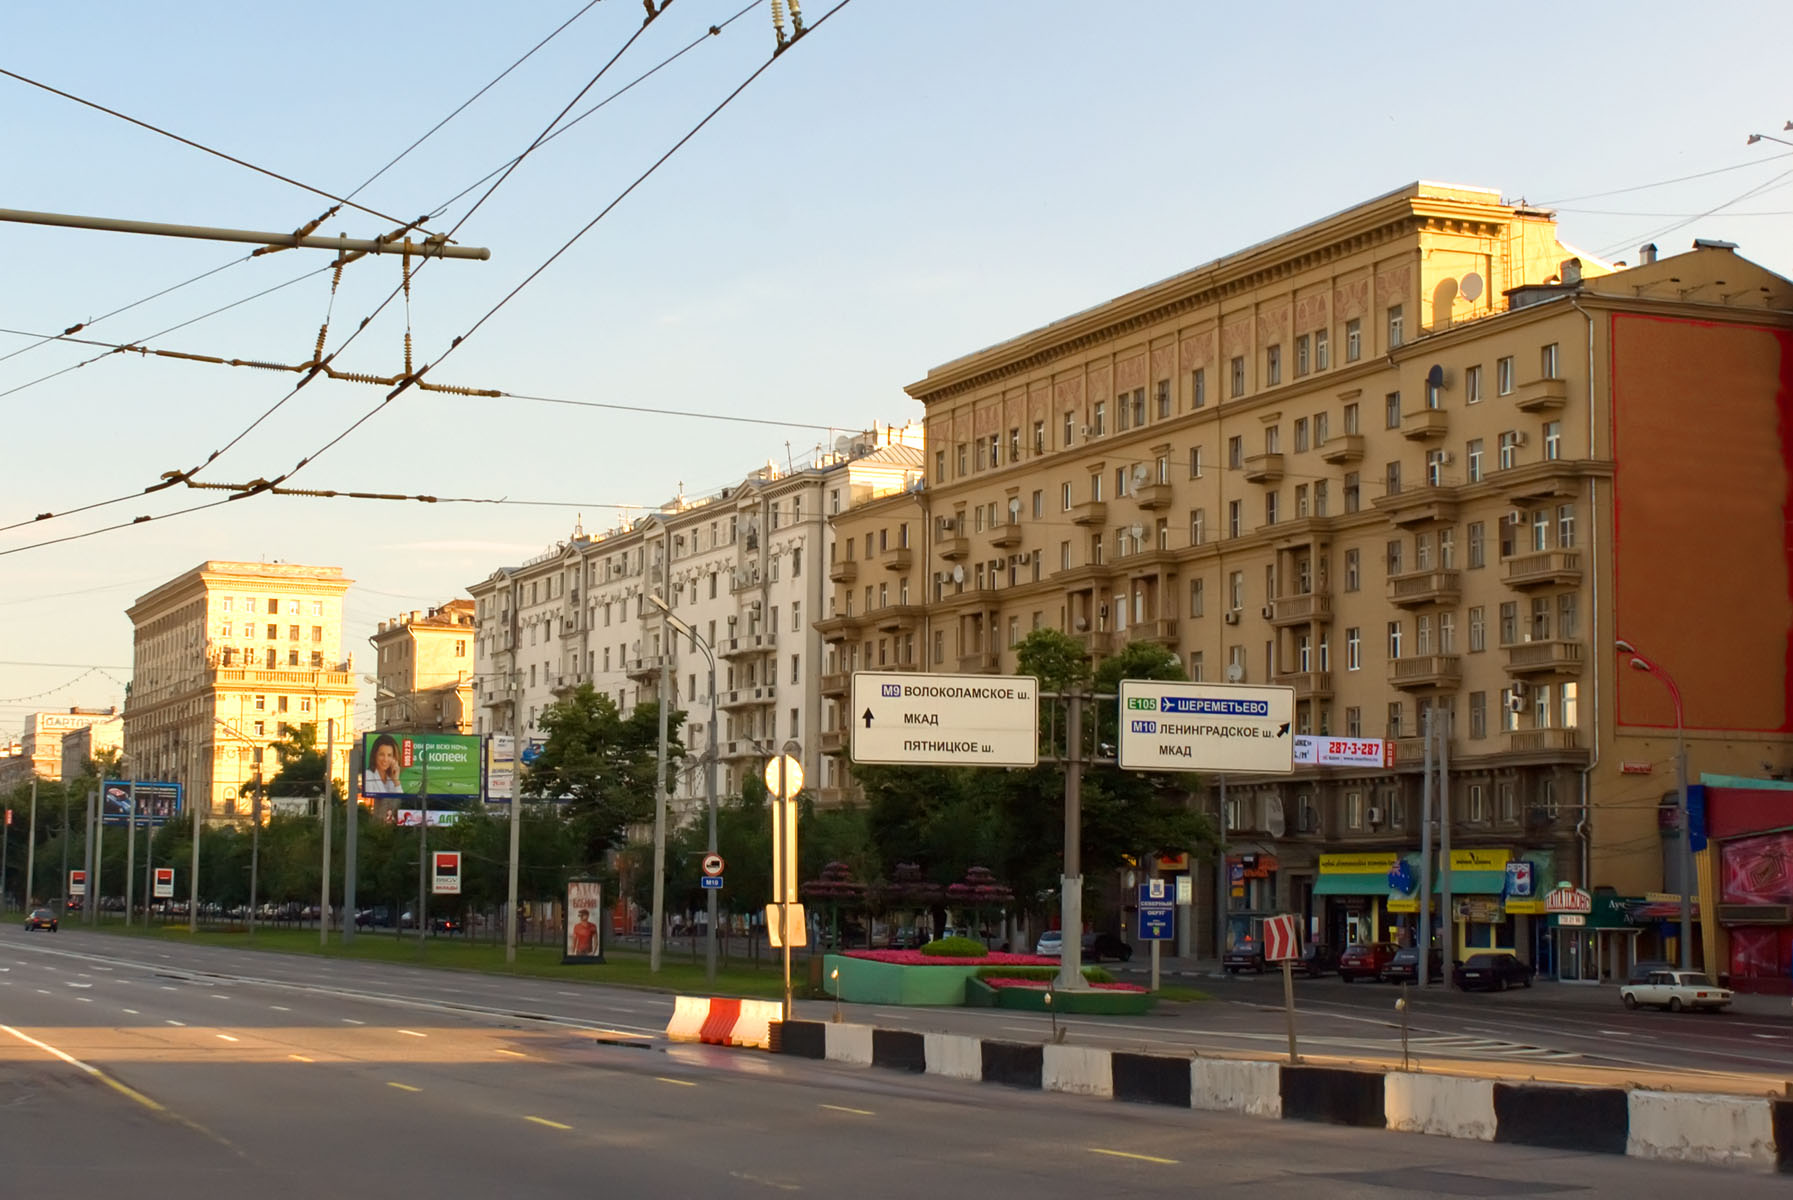 Ленинградский проспект